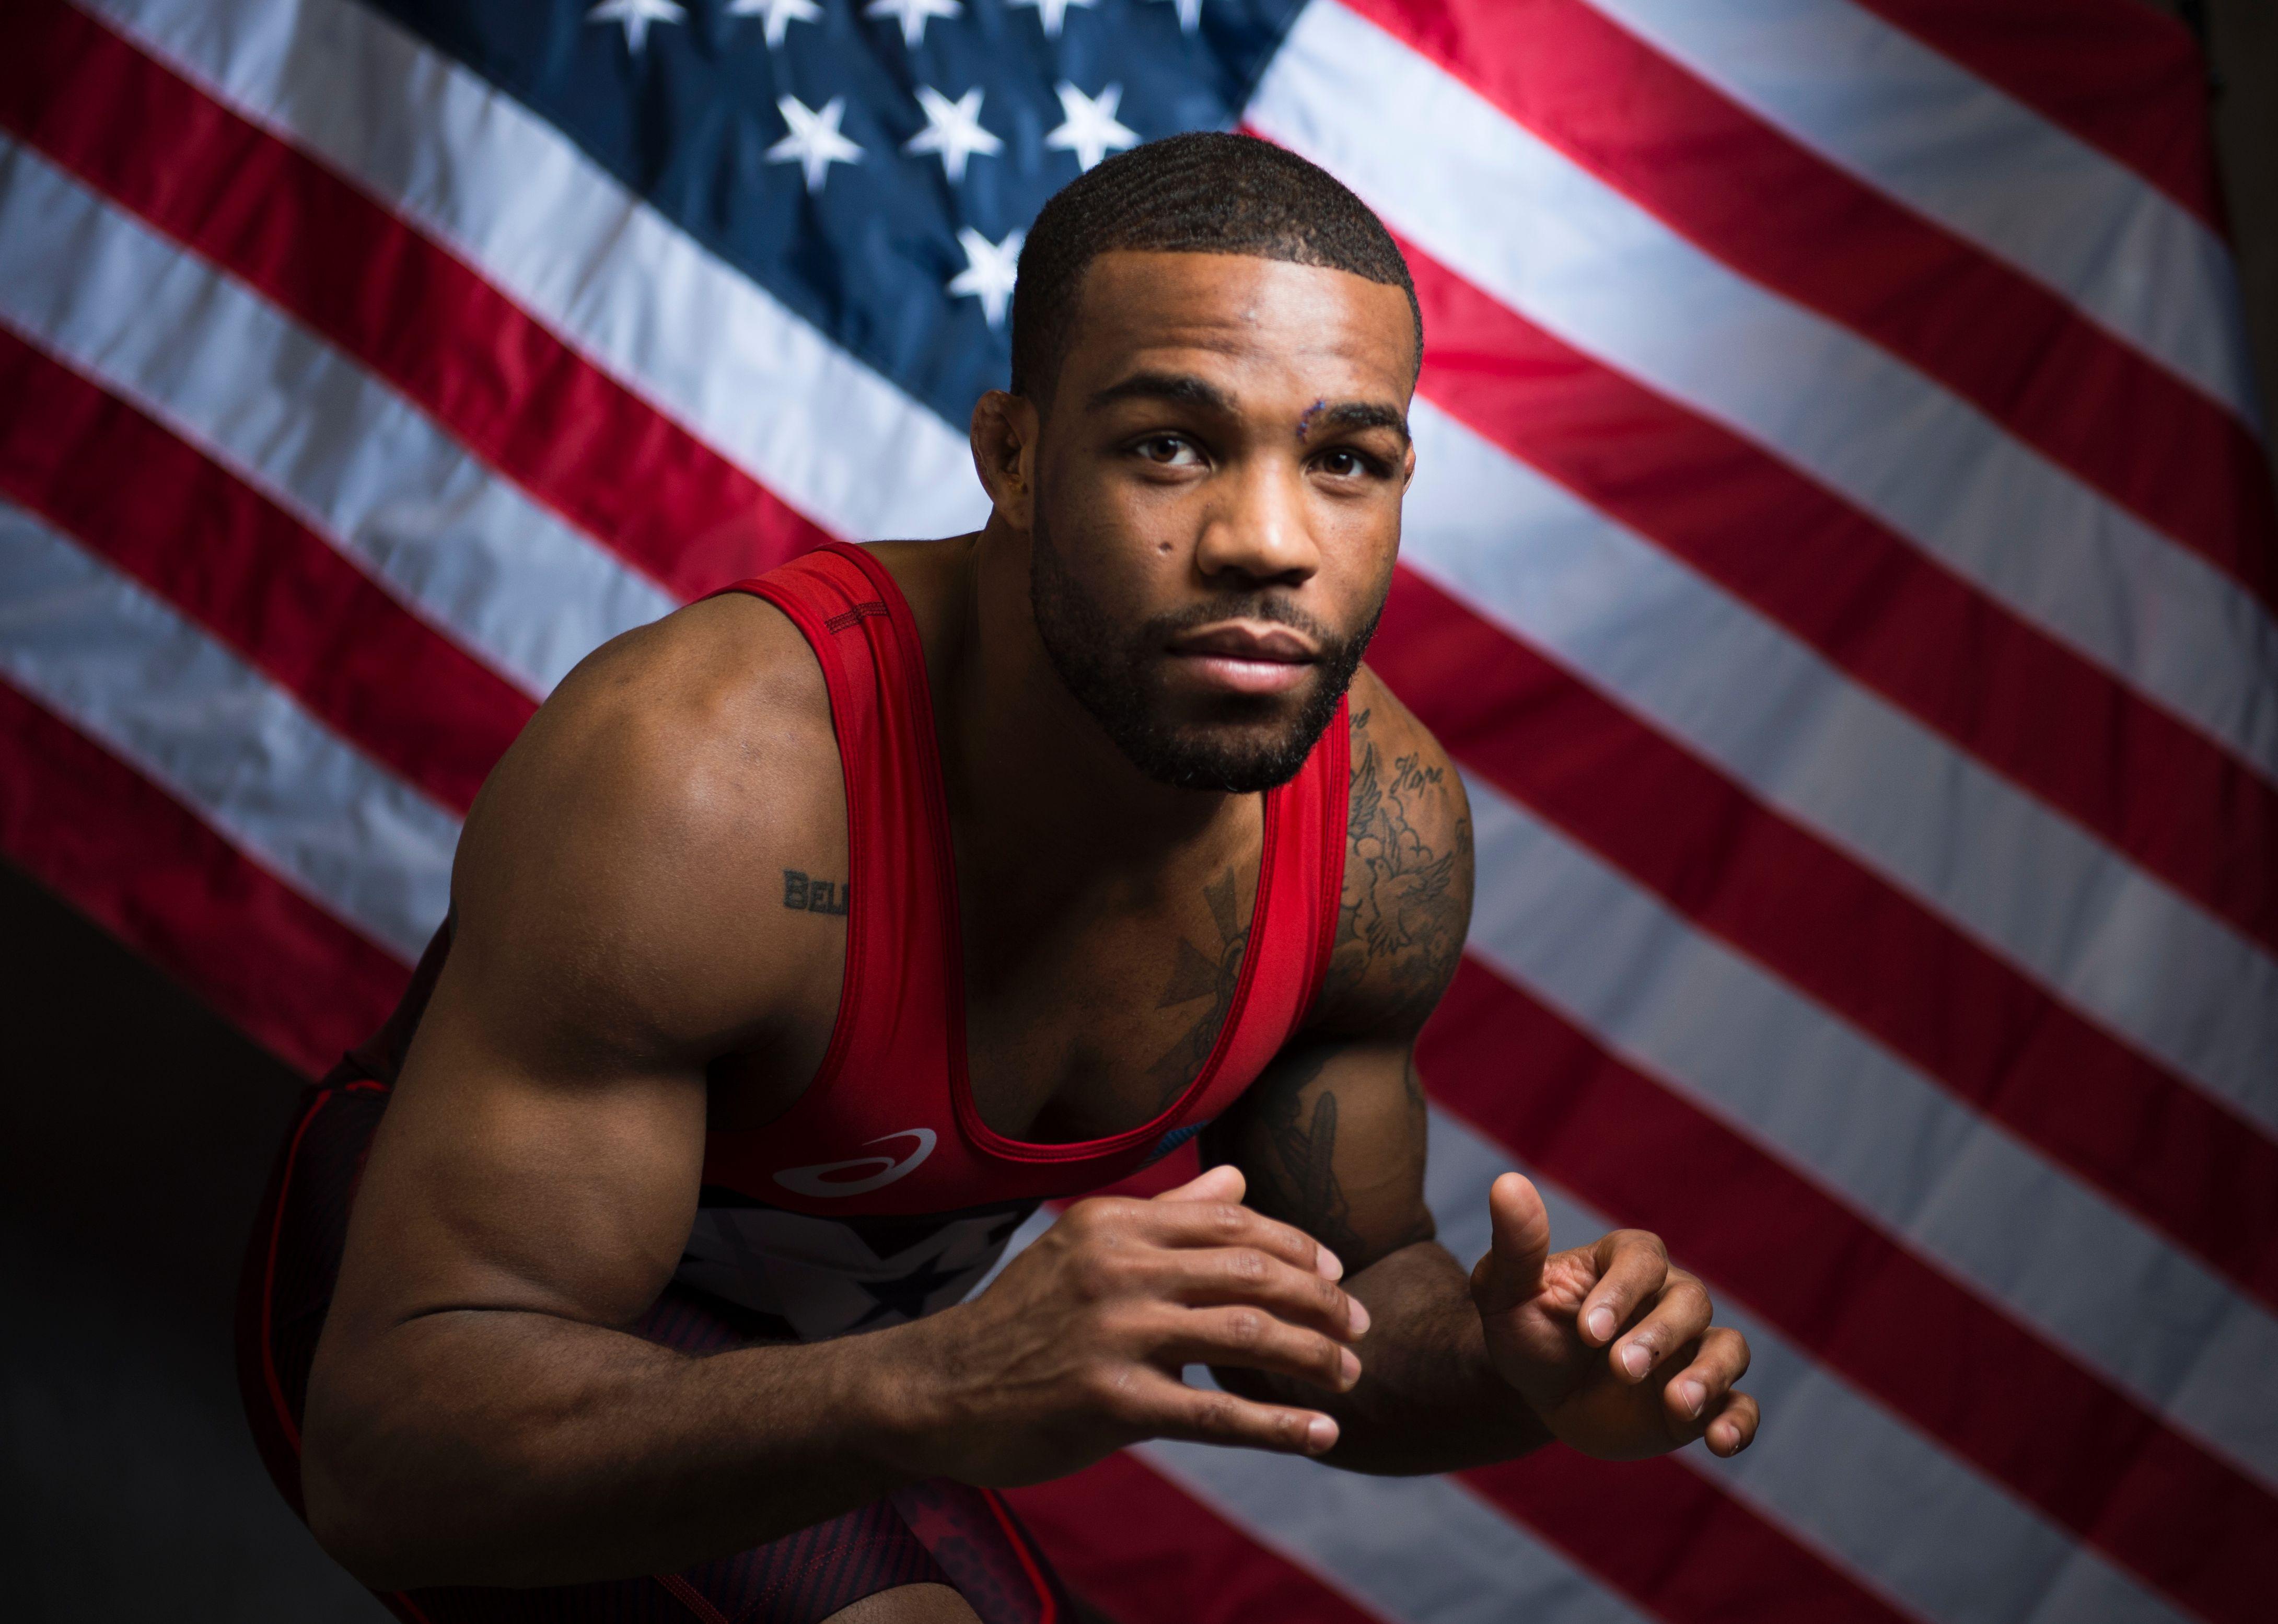 Olympian Jordan Burroughs "When I win, America wins" CBS News